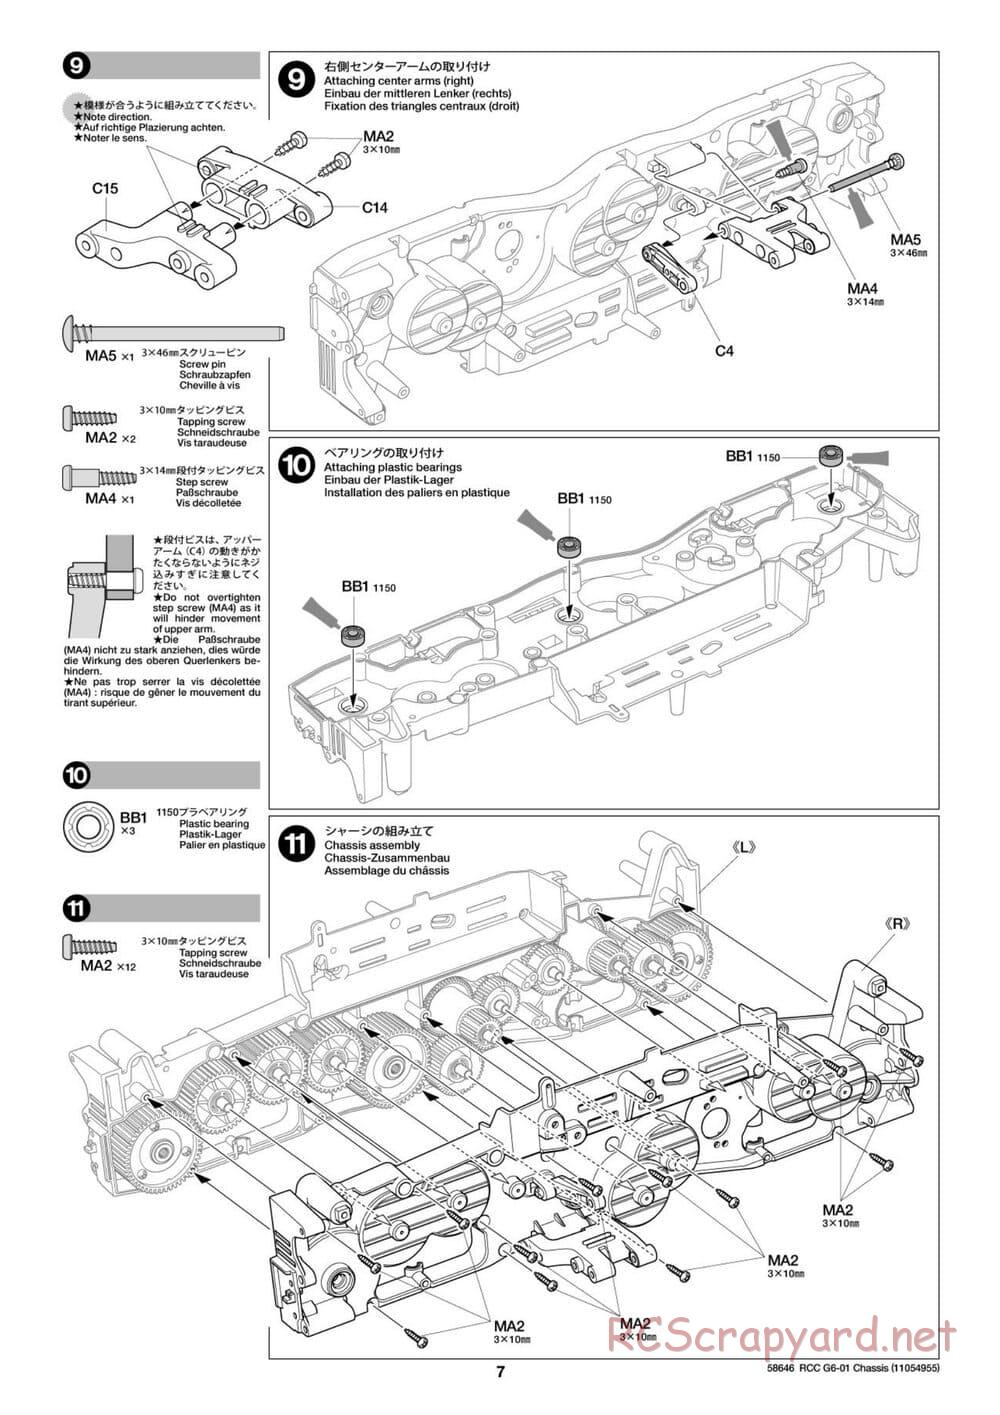 Tamiya - Konghead 6x6 - G6-01 Chassis - Manual - Page 7